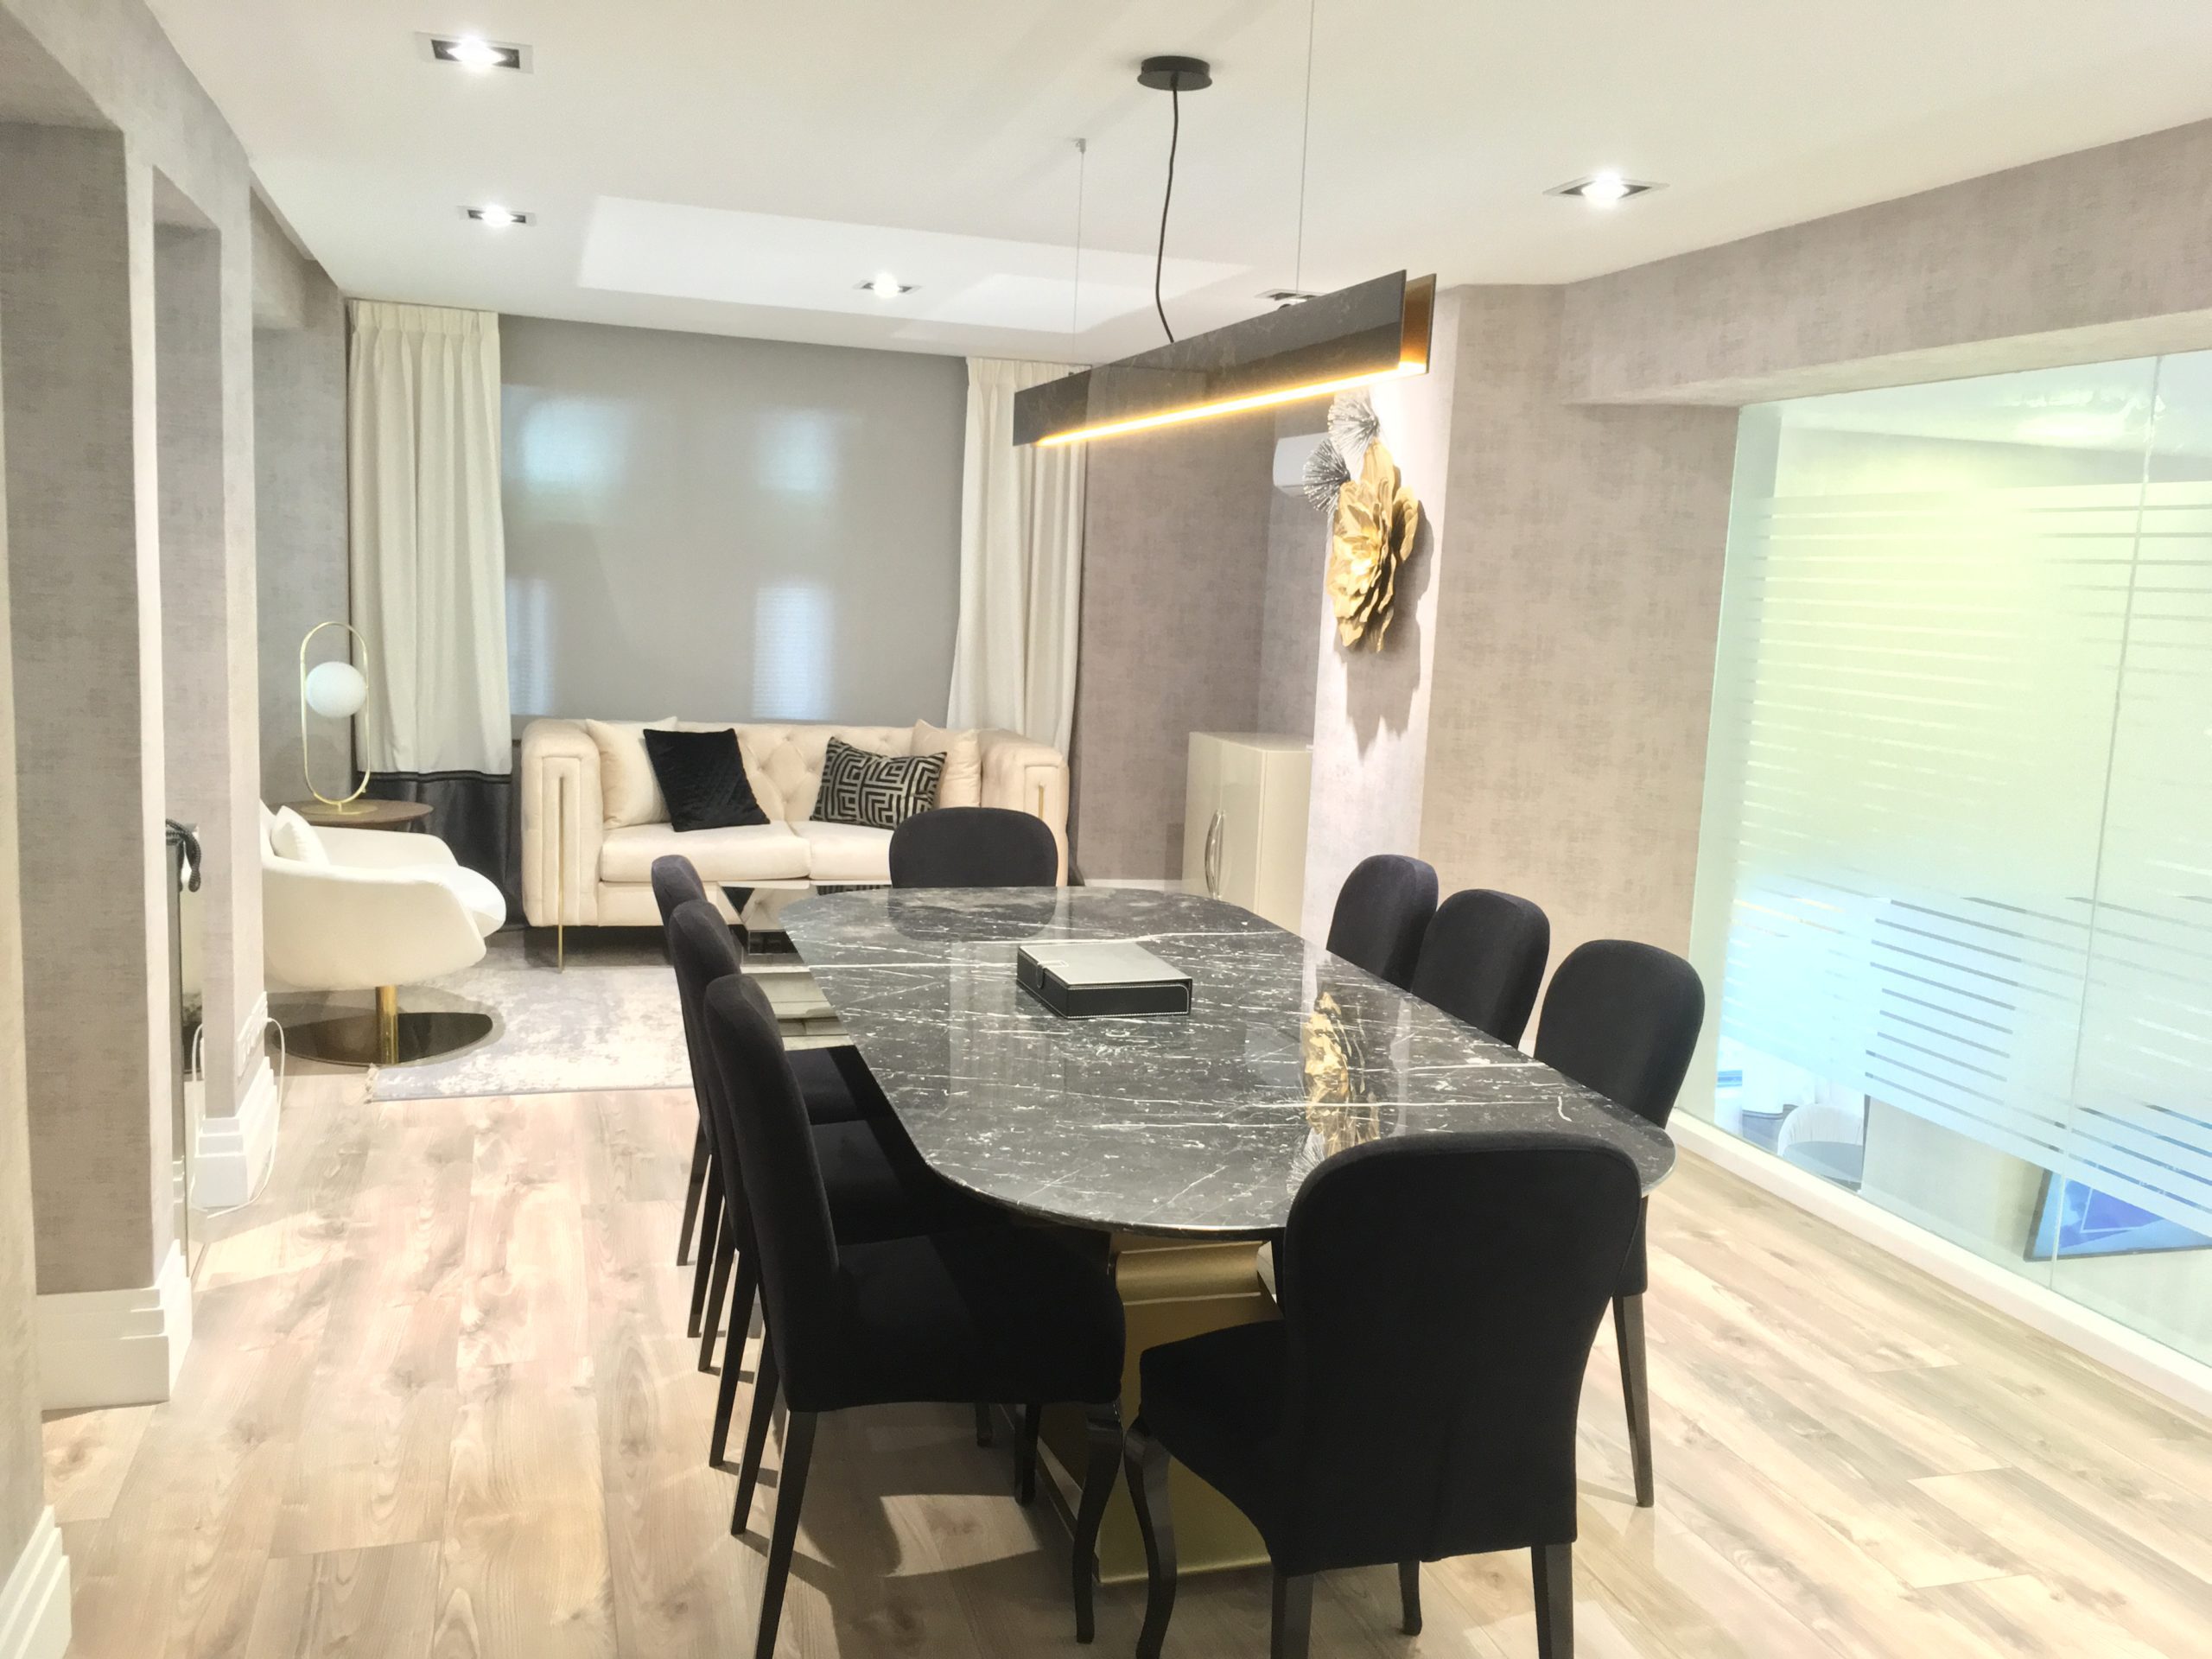 Mr. House Real Estate inaugura su nueva oficina en Majadahonda, Madrid